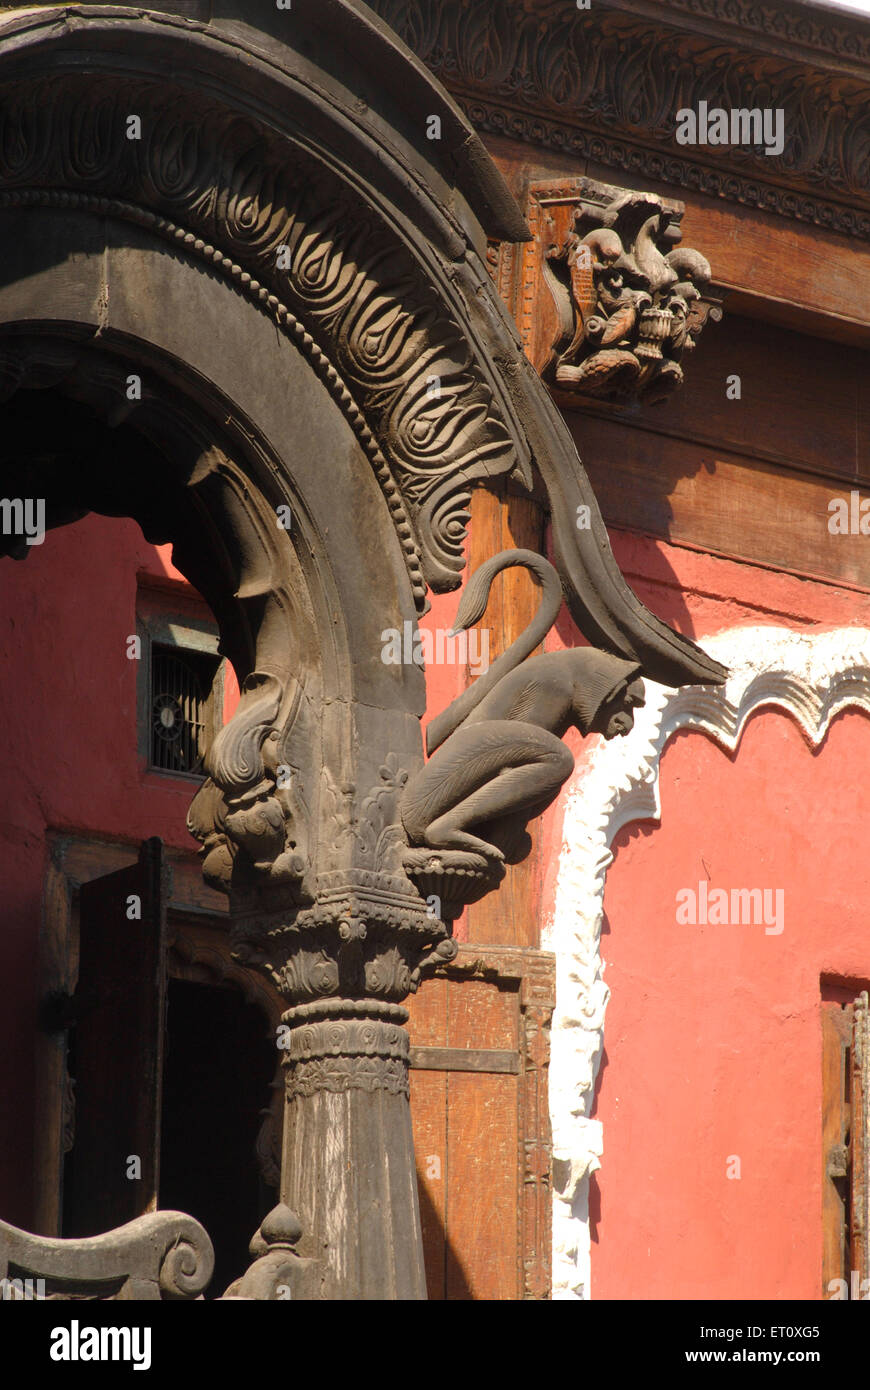 Wood carved pillar with monkey and floral design at entrance of Vishrambaug Wada second palace of Peshve the Maratha king ; Pune Stock Photo